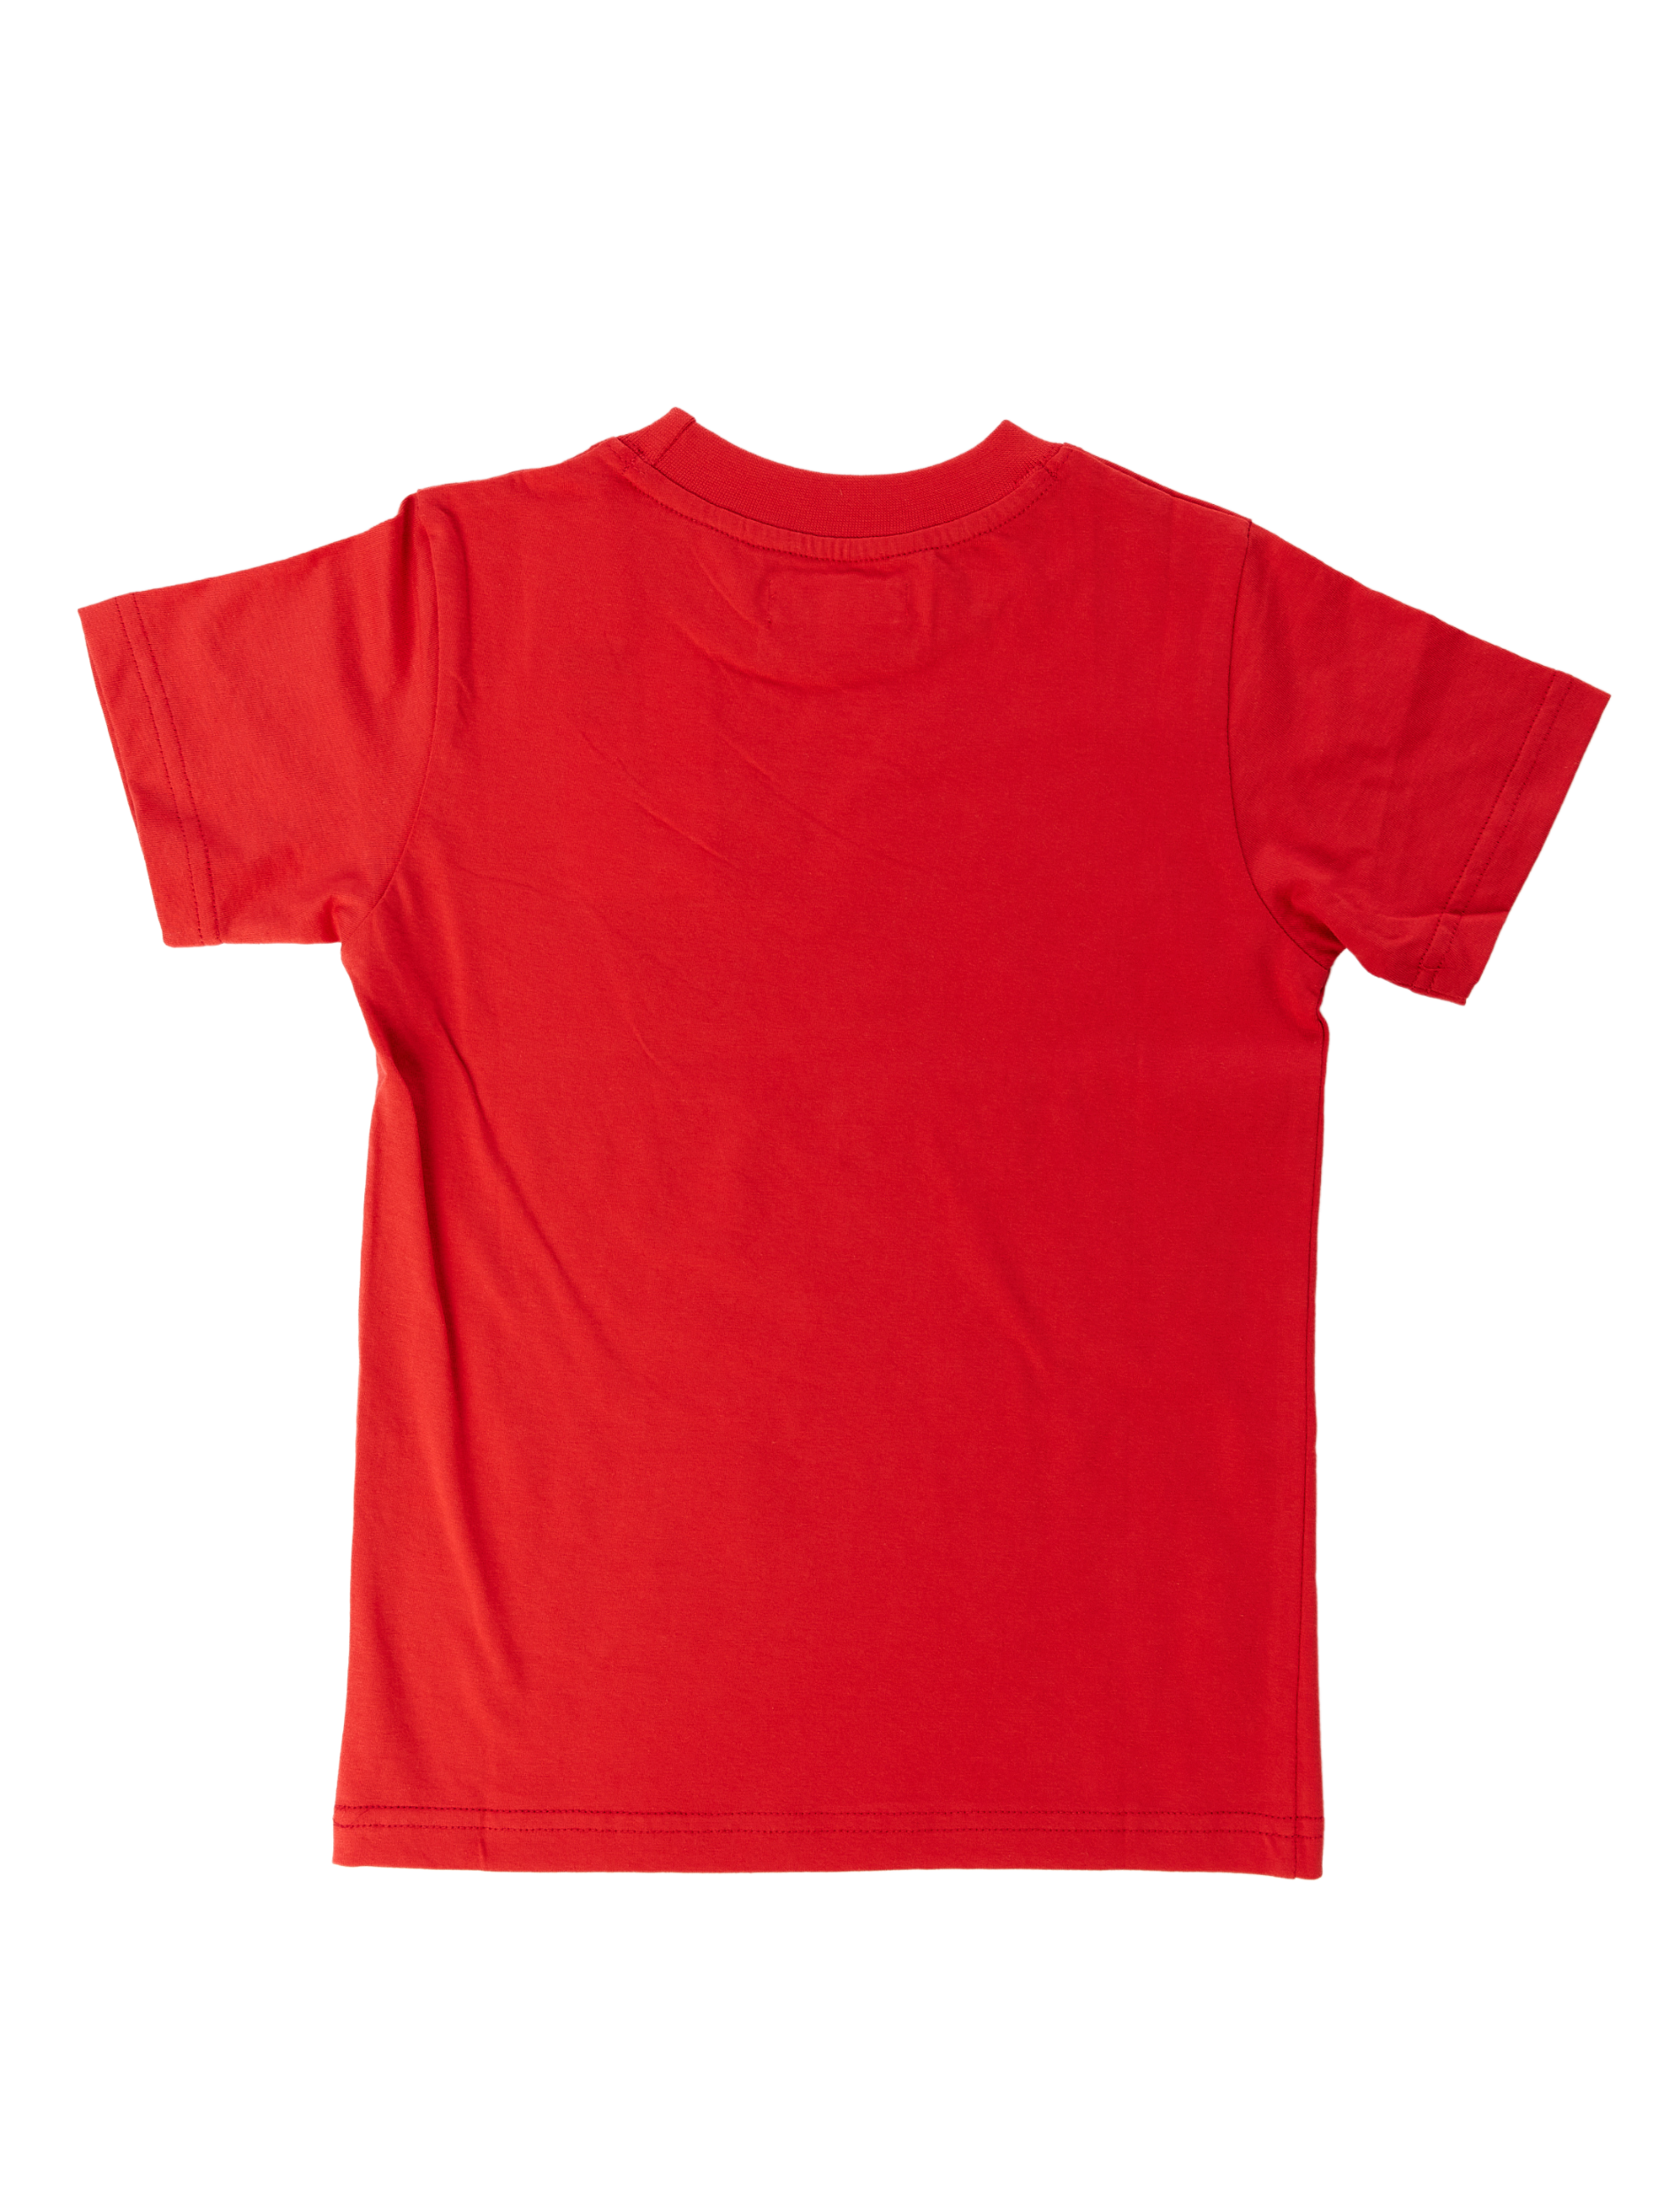 Teens T-shirt (xxs-xs is for girls size 10/12 14/16)